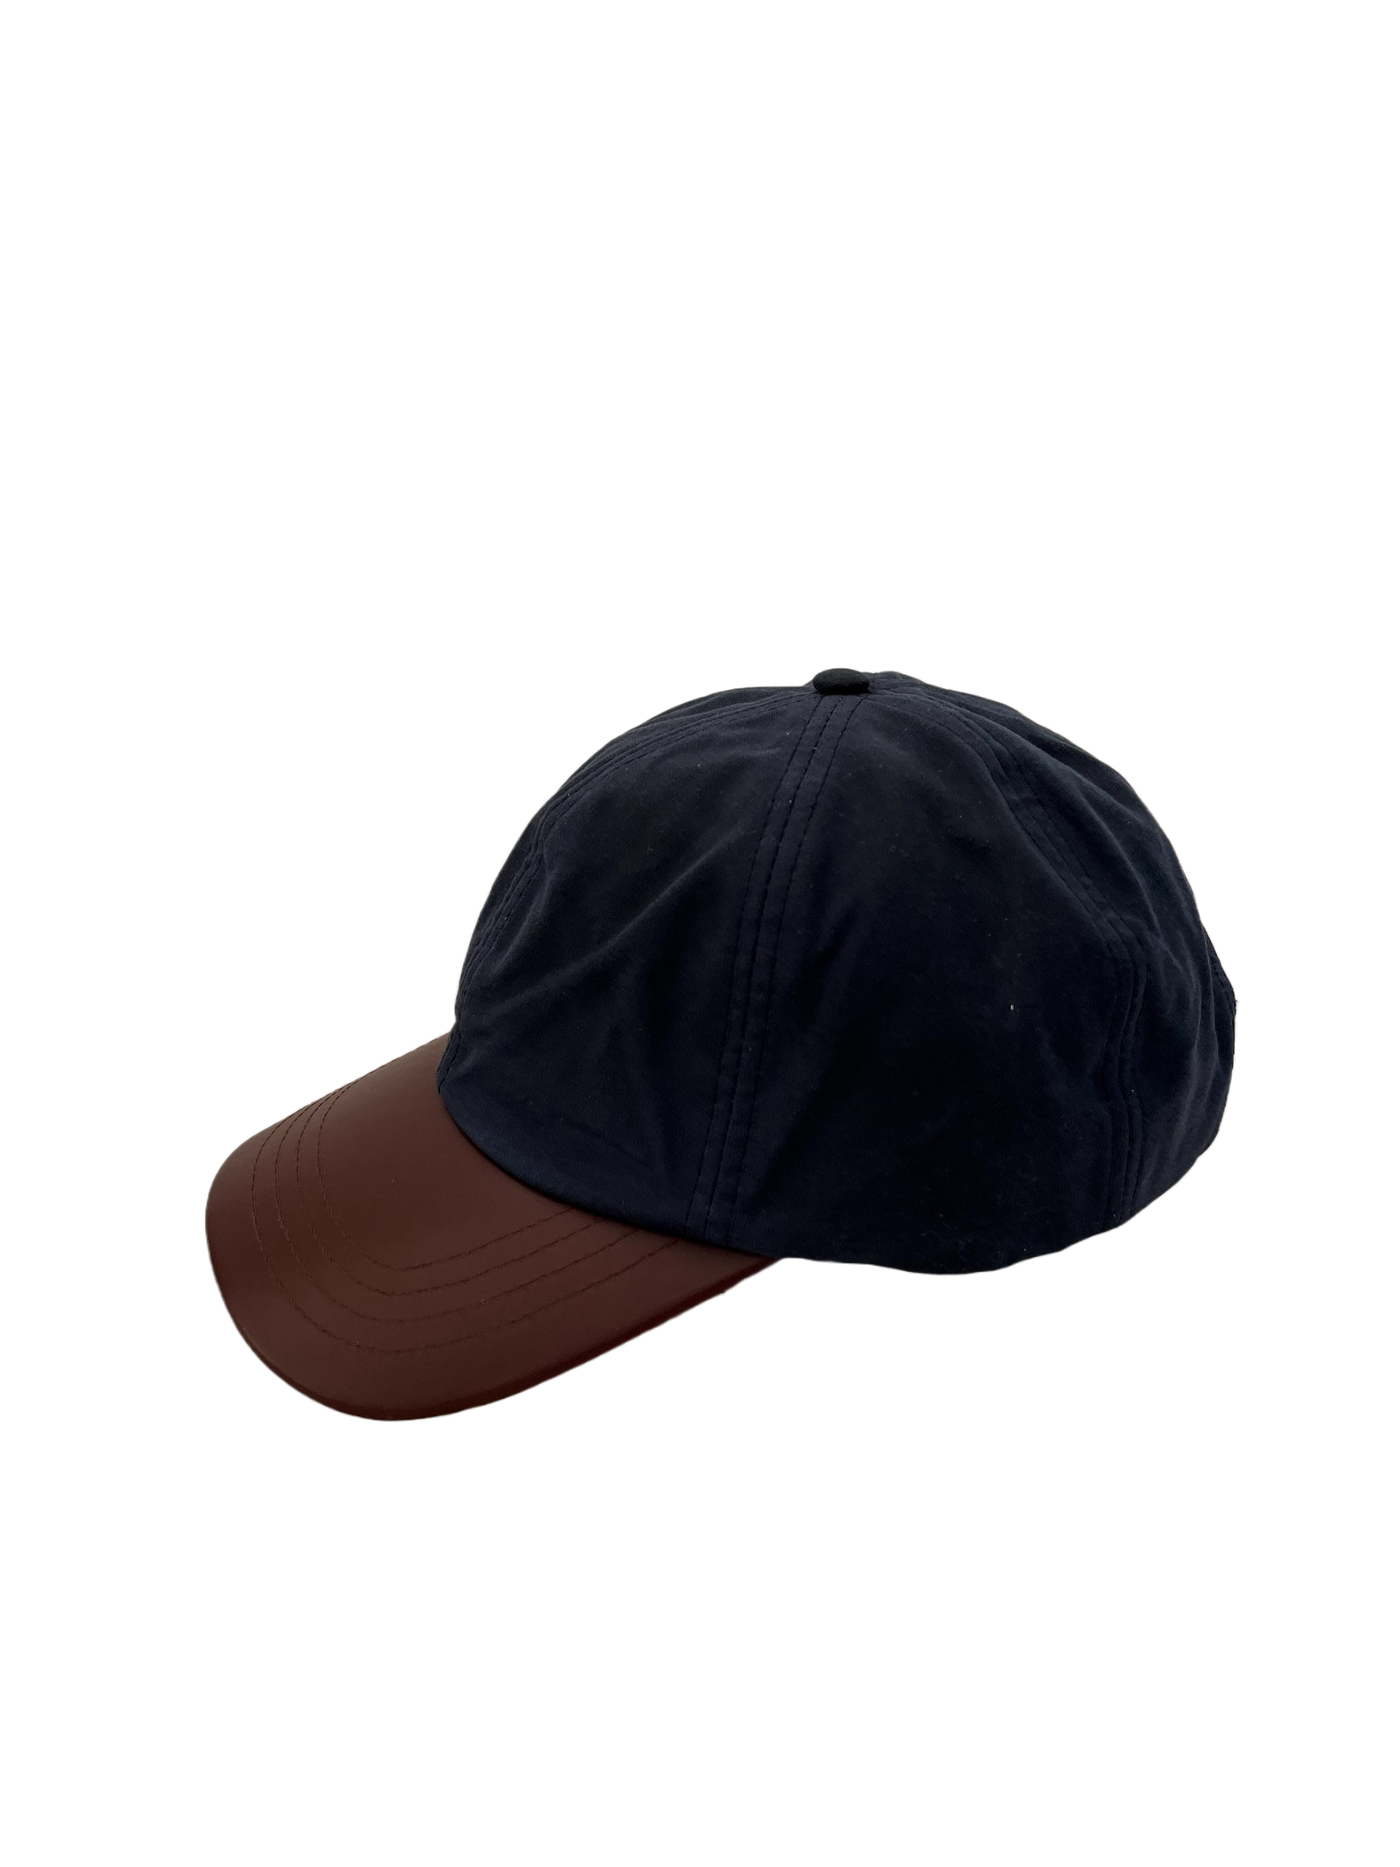 Oxford Blue Wax/Leather Baseball Cap, Navy (Unisex)